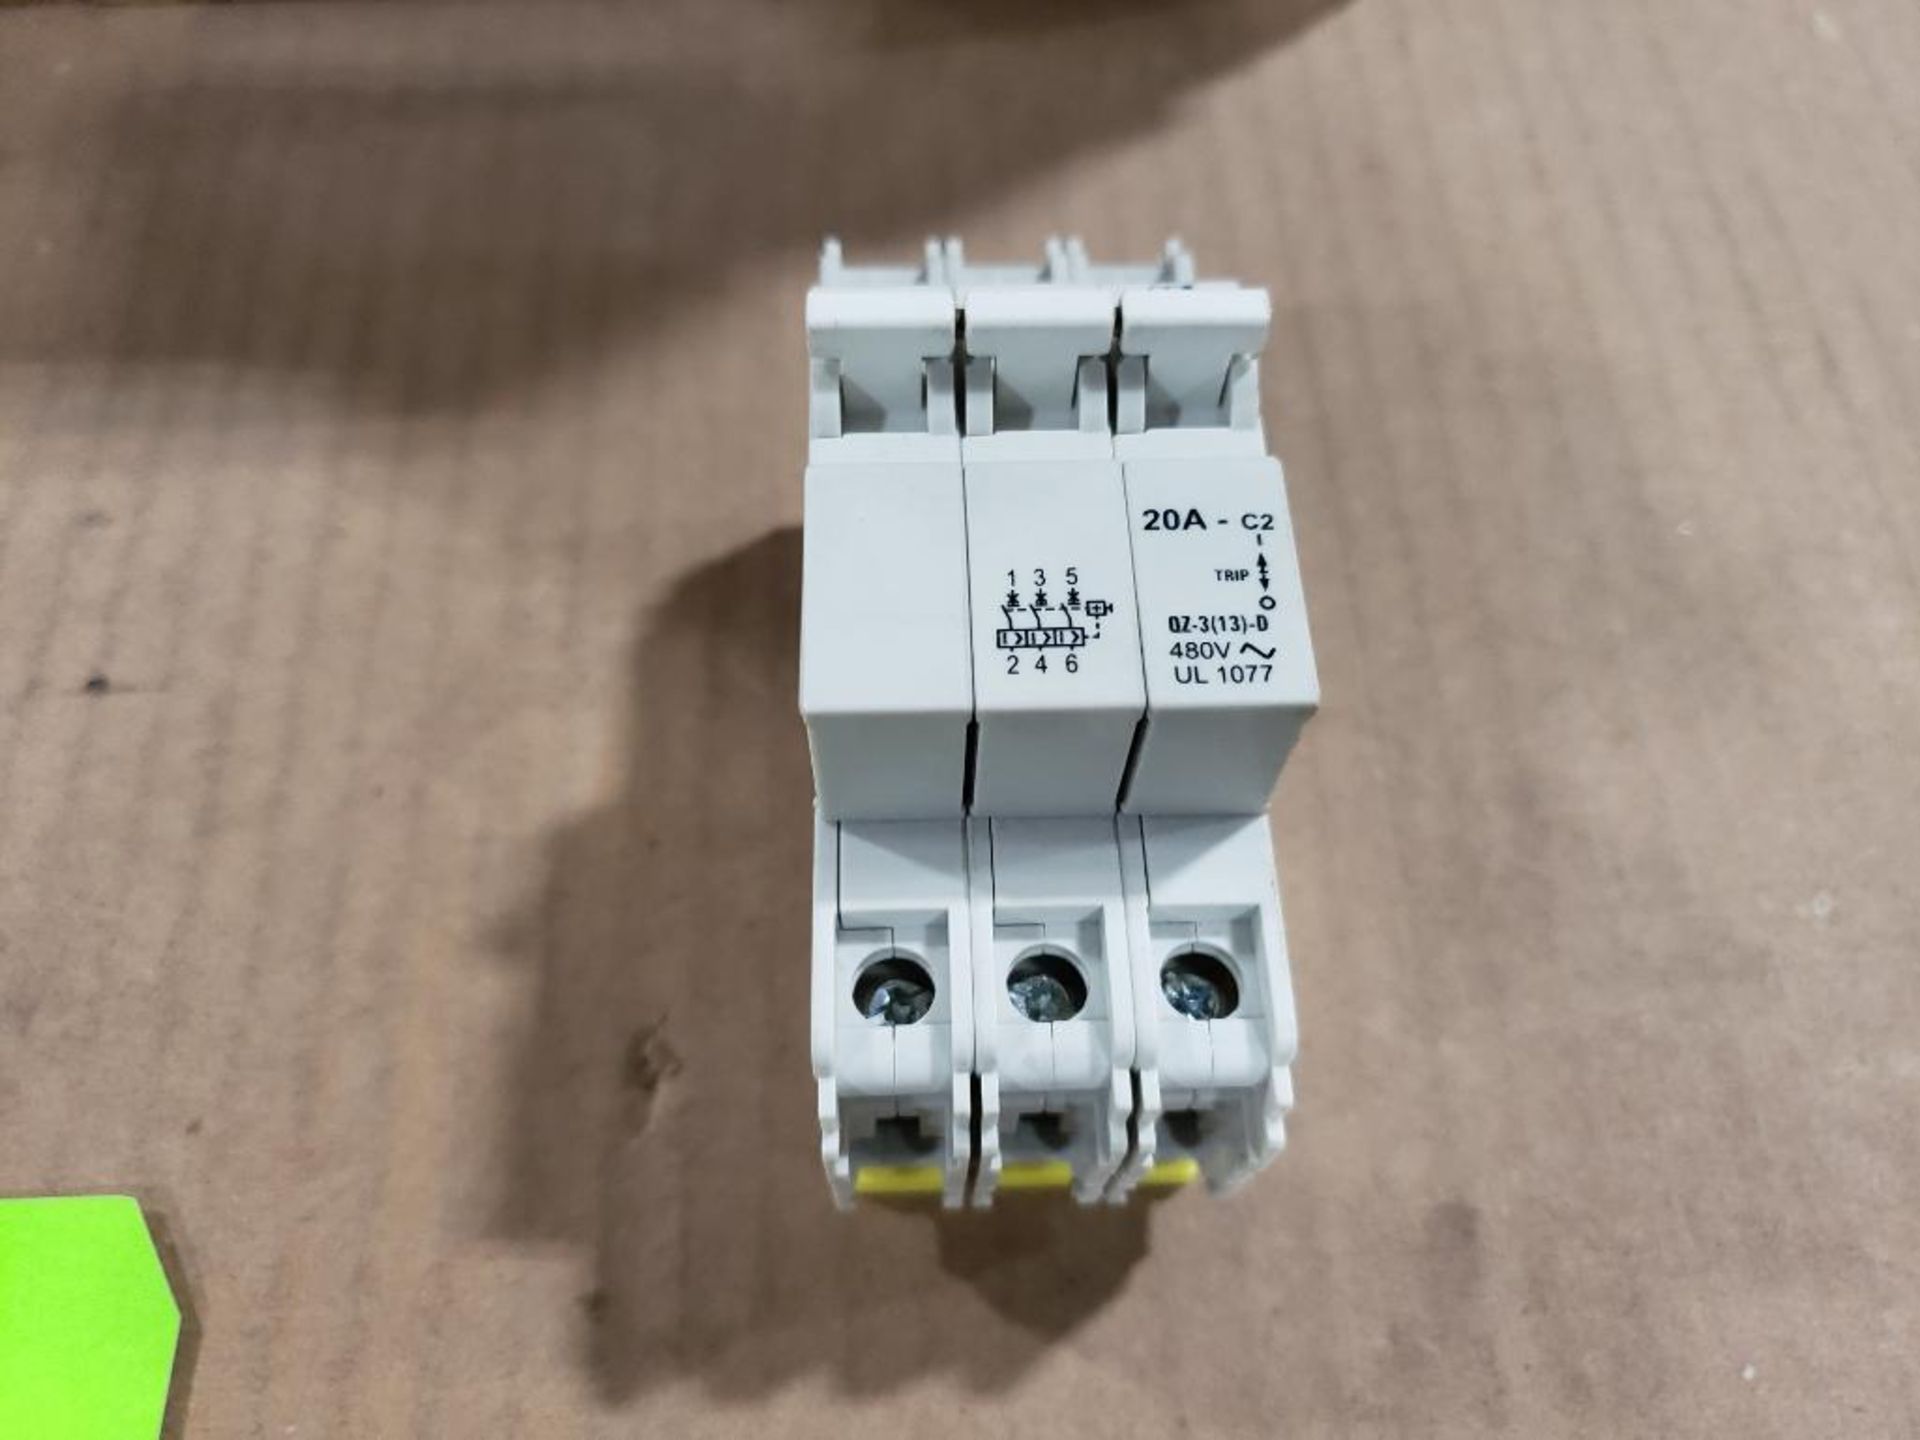 Qty 144 - CBI circuit breakers. Part number QZD18204 or QZ-1(13)-D-2-4A. - Image 3 of 5